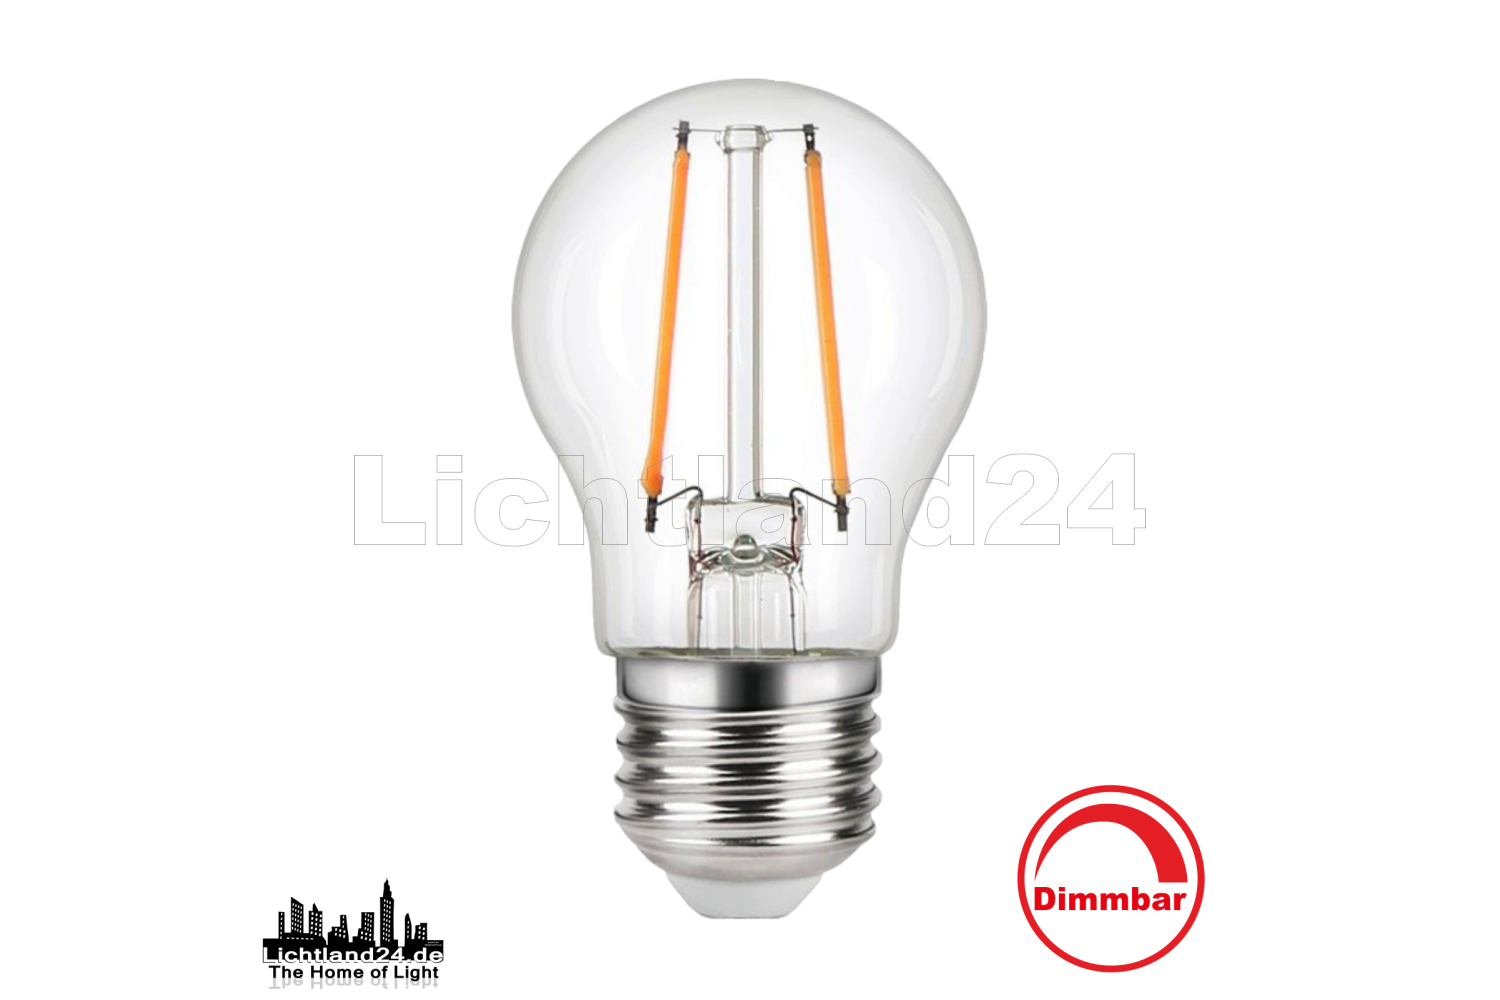 25er Pack E27 LED Filament Tropfen G45-2W 2700K warmweiße Glühlampe = 25W 